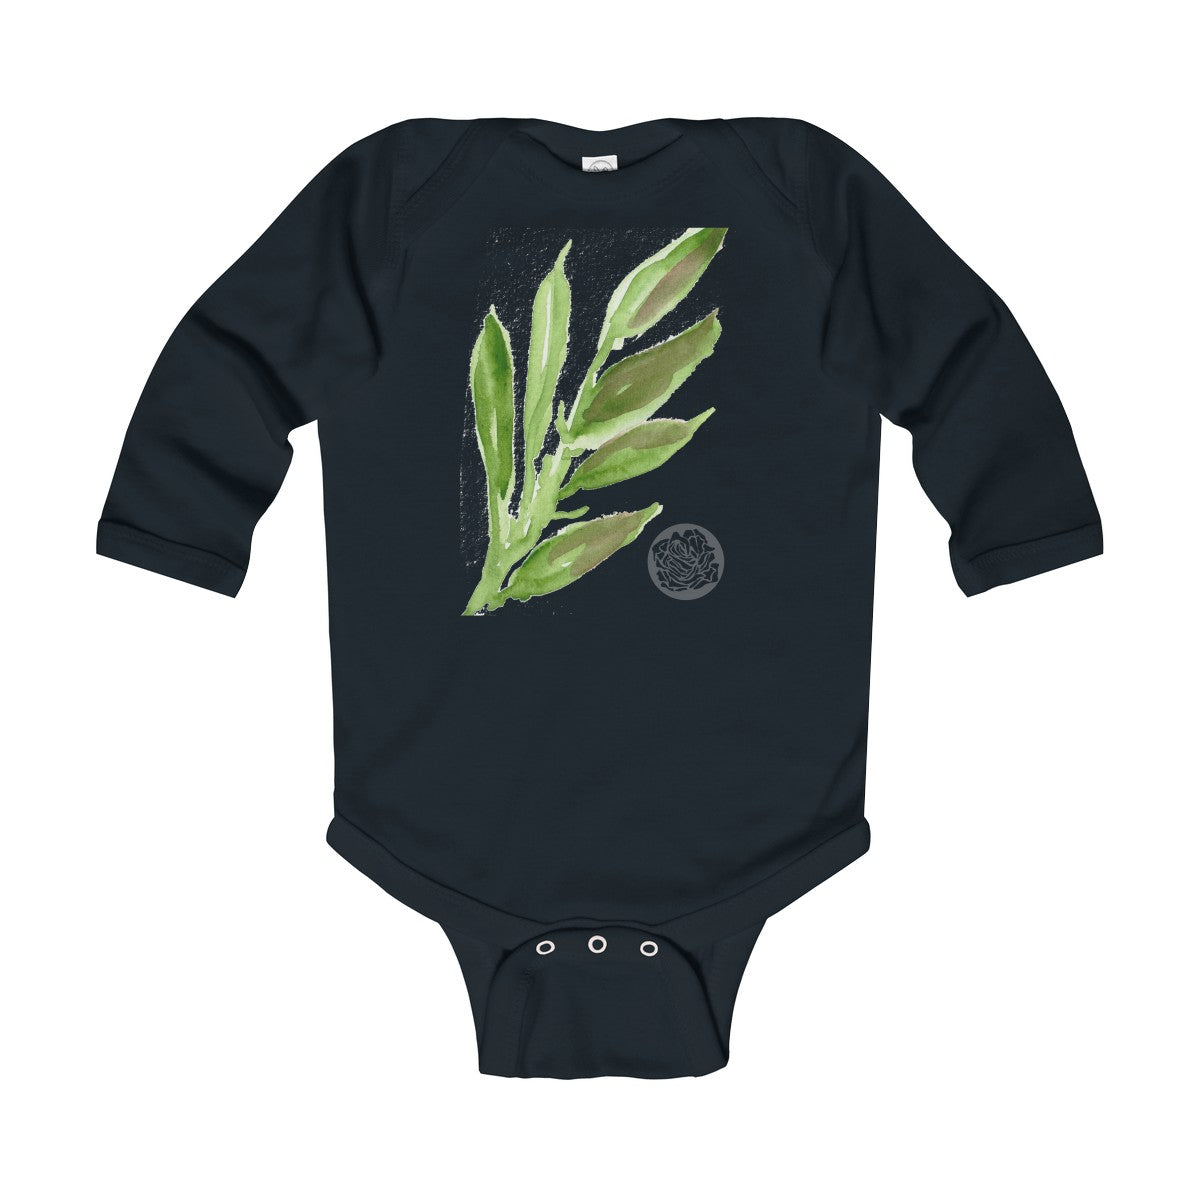 Green Leaves Infant Long Sleeve Bodysuit - Made in United Kingdom (UK Size: 6M-24M)-Kids clothes-Black-18M-Heidi Kimura Art LLC